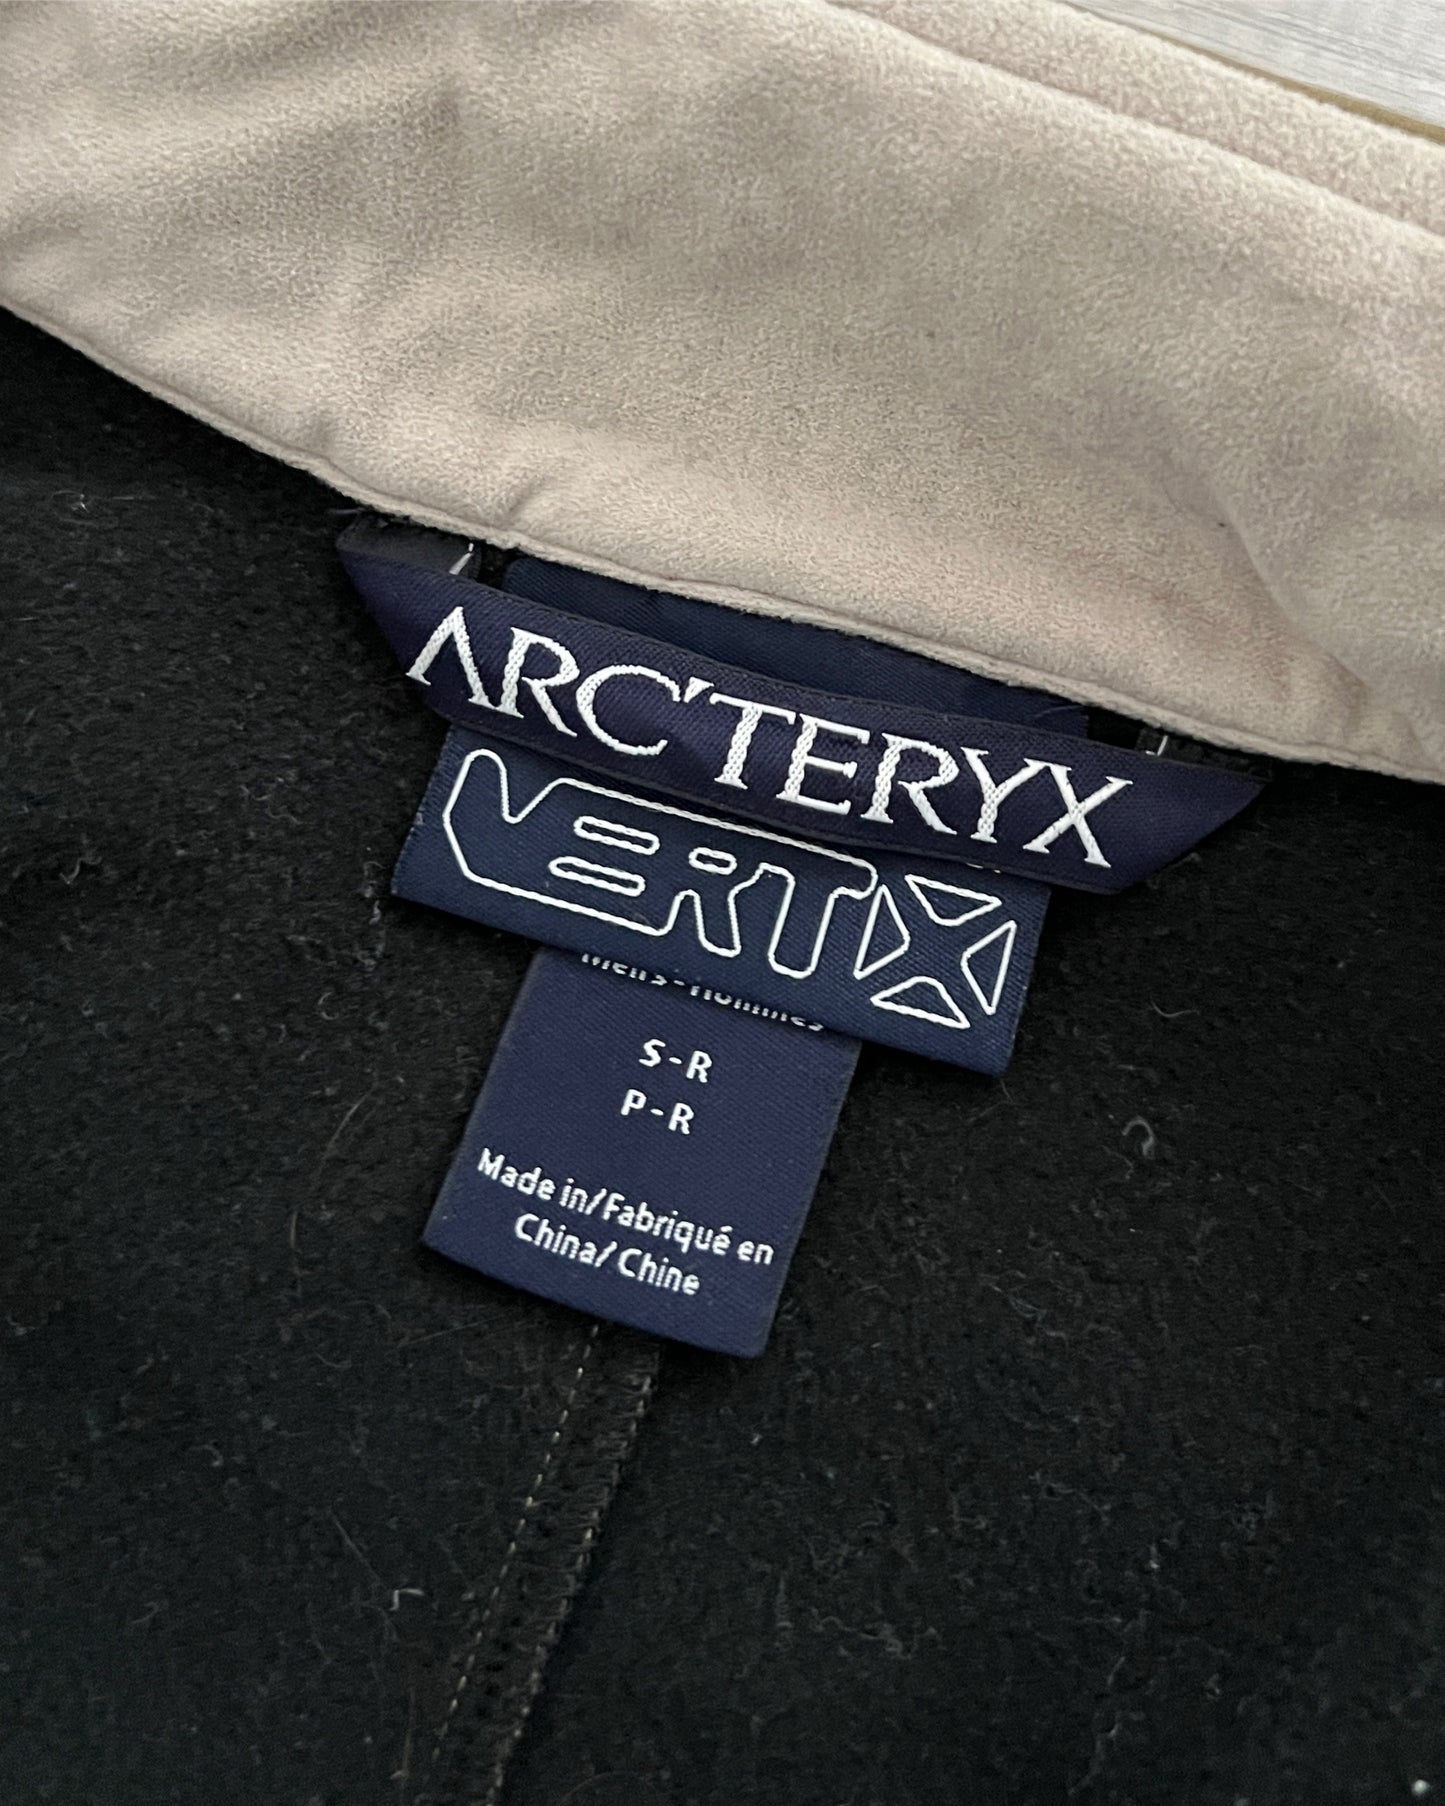 Arcteryx LEAF VertX Justice Utility Jacket - Size S